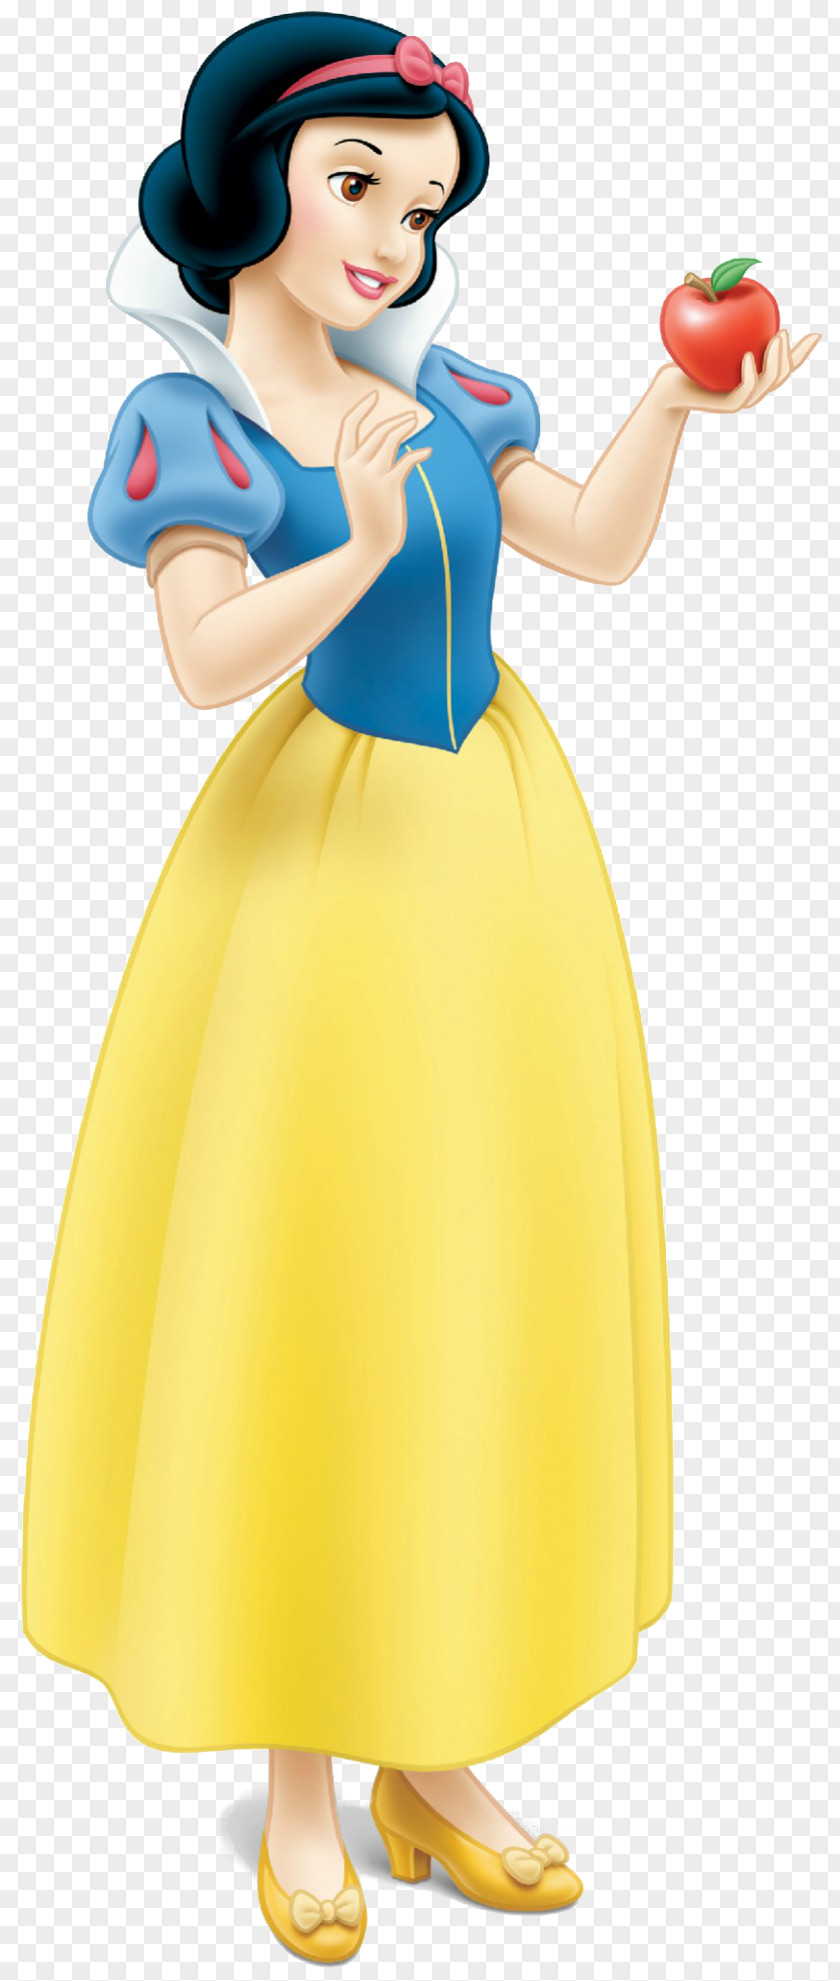 Snow White And The Seven Dwarfs Disney Princess Walt Company PNG